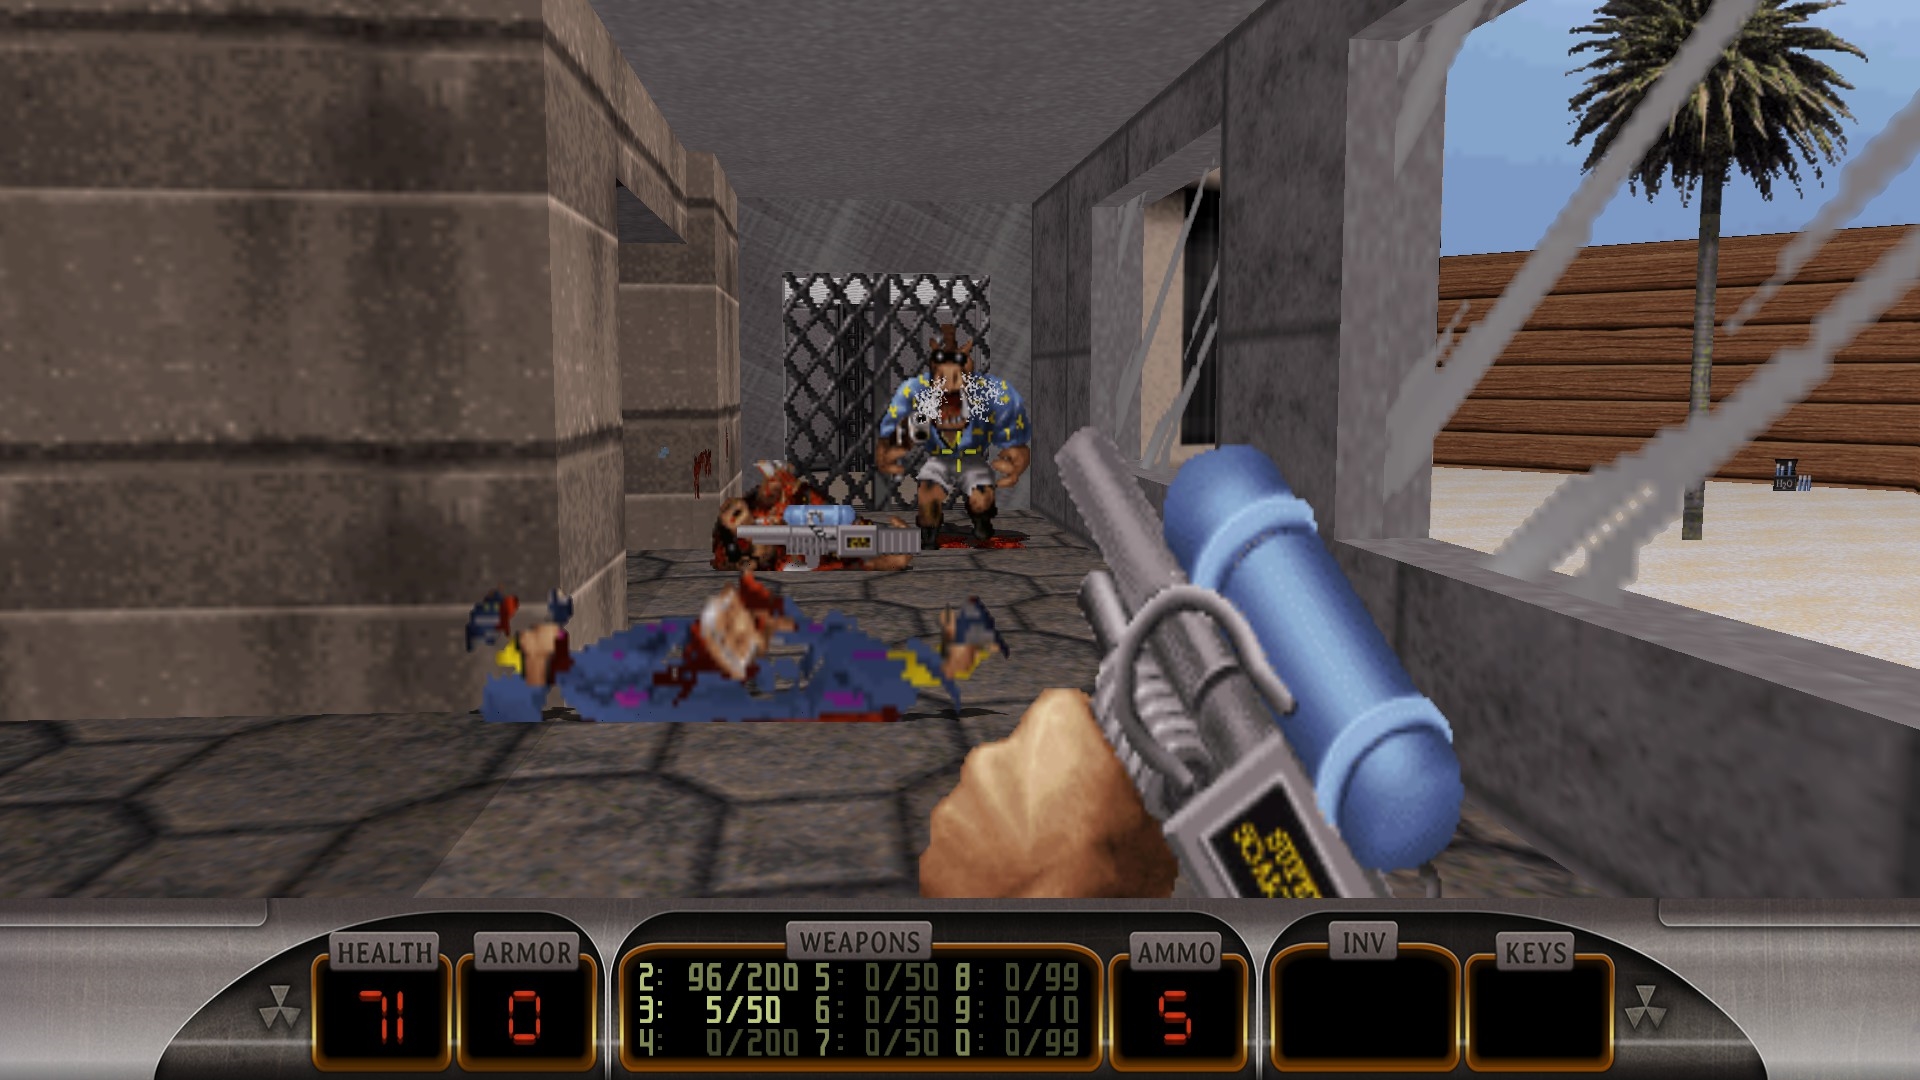 Duke Nukem 3D: Megaton Edition Pics, Video Game Collection